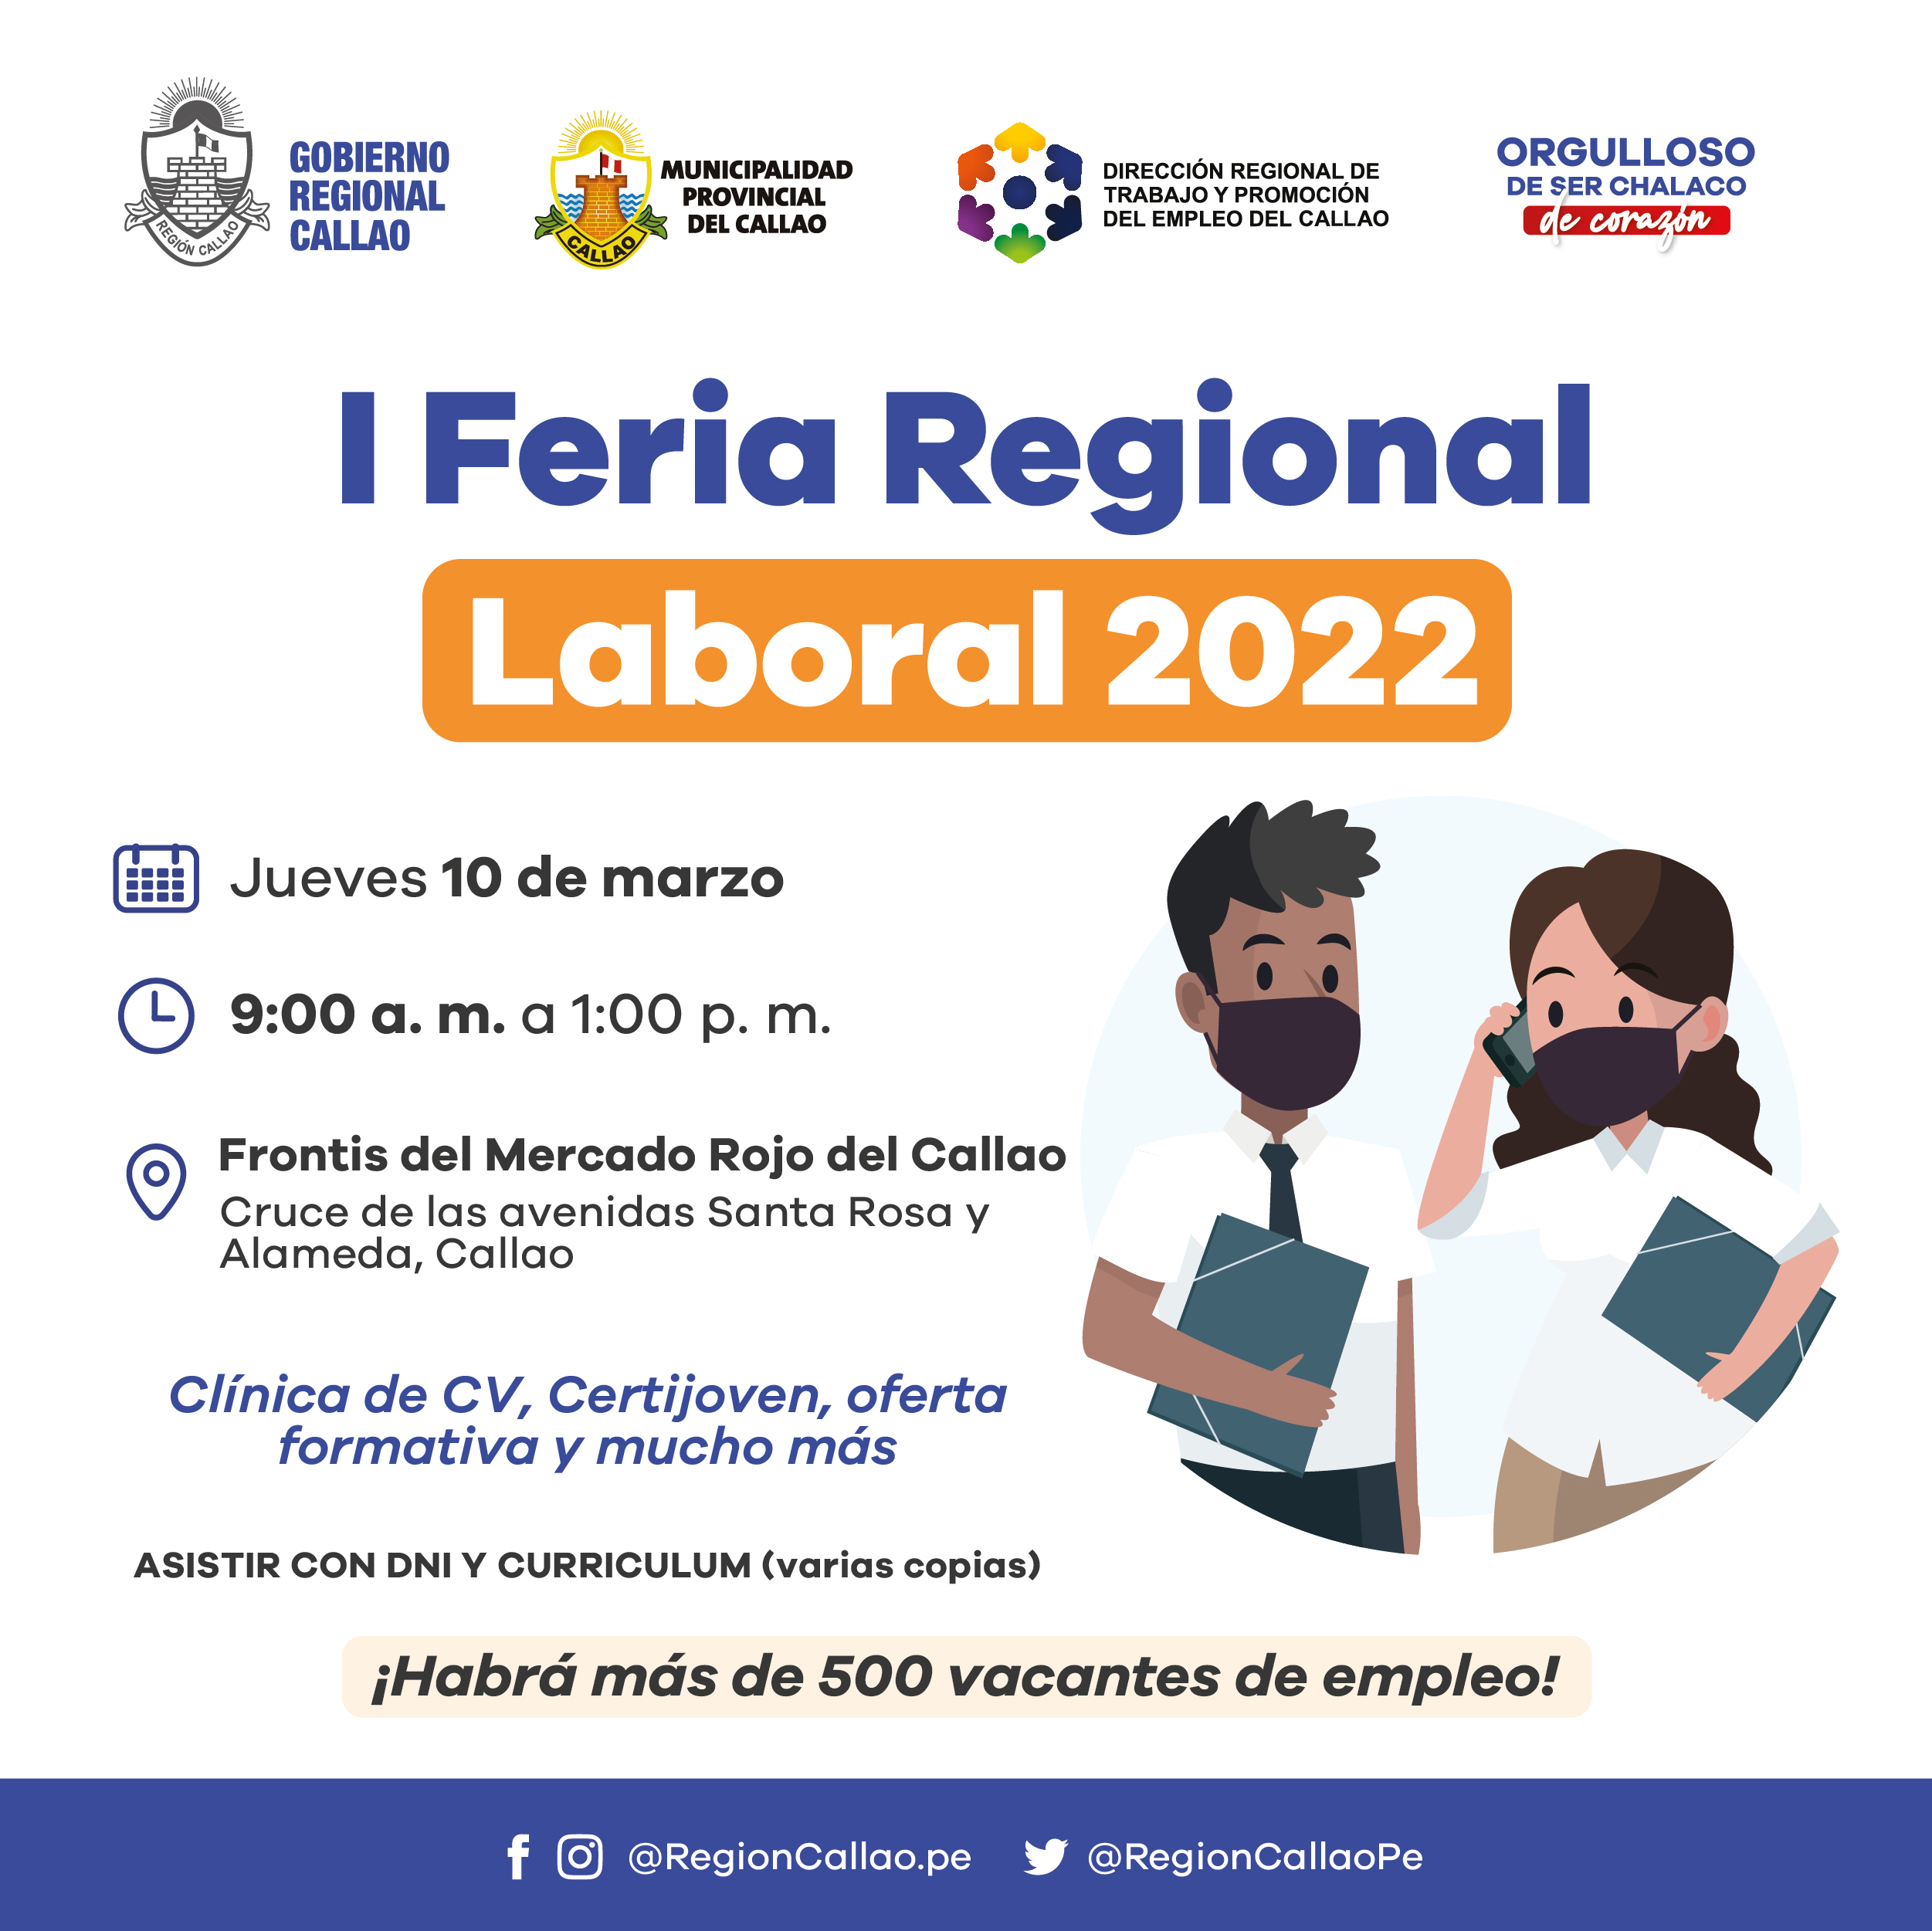 I FERIA REGIONAL LABORAL 2022